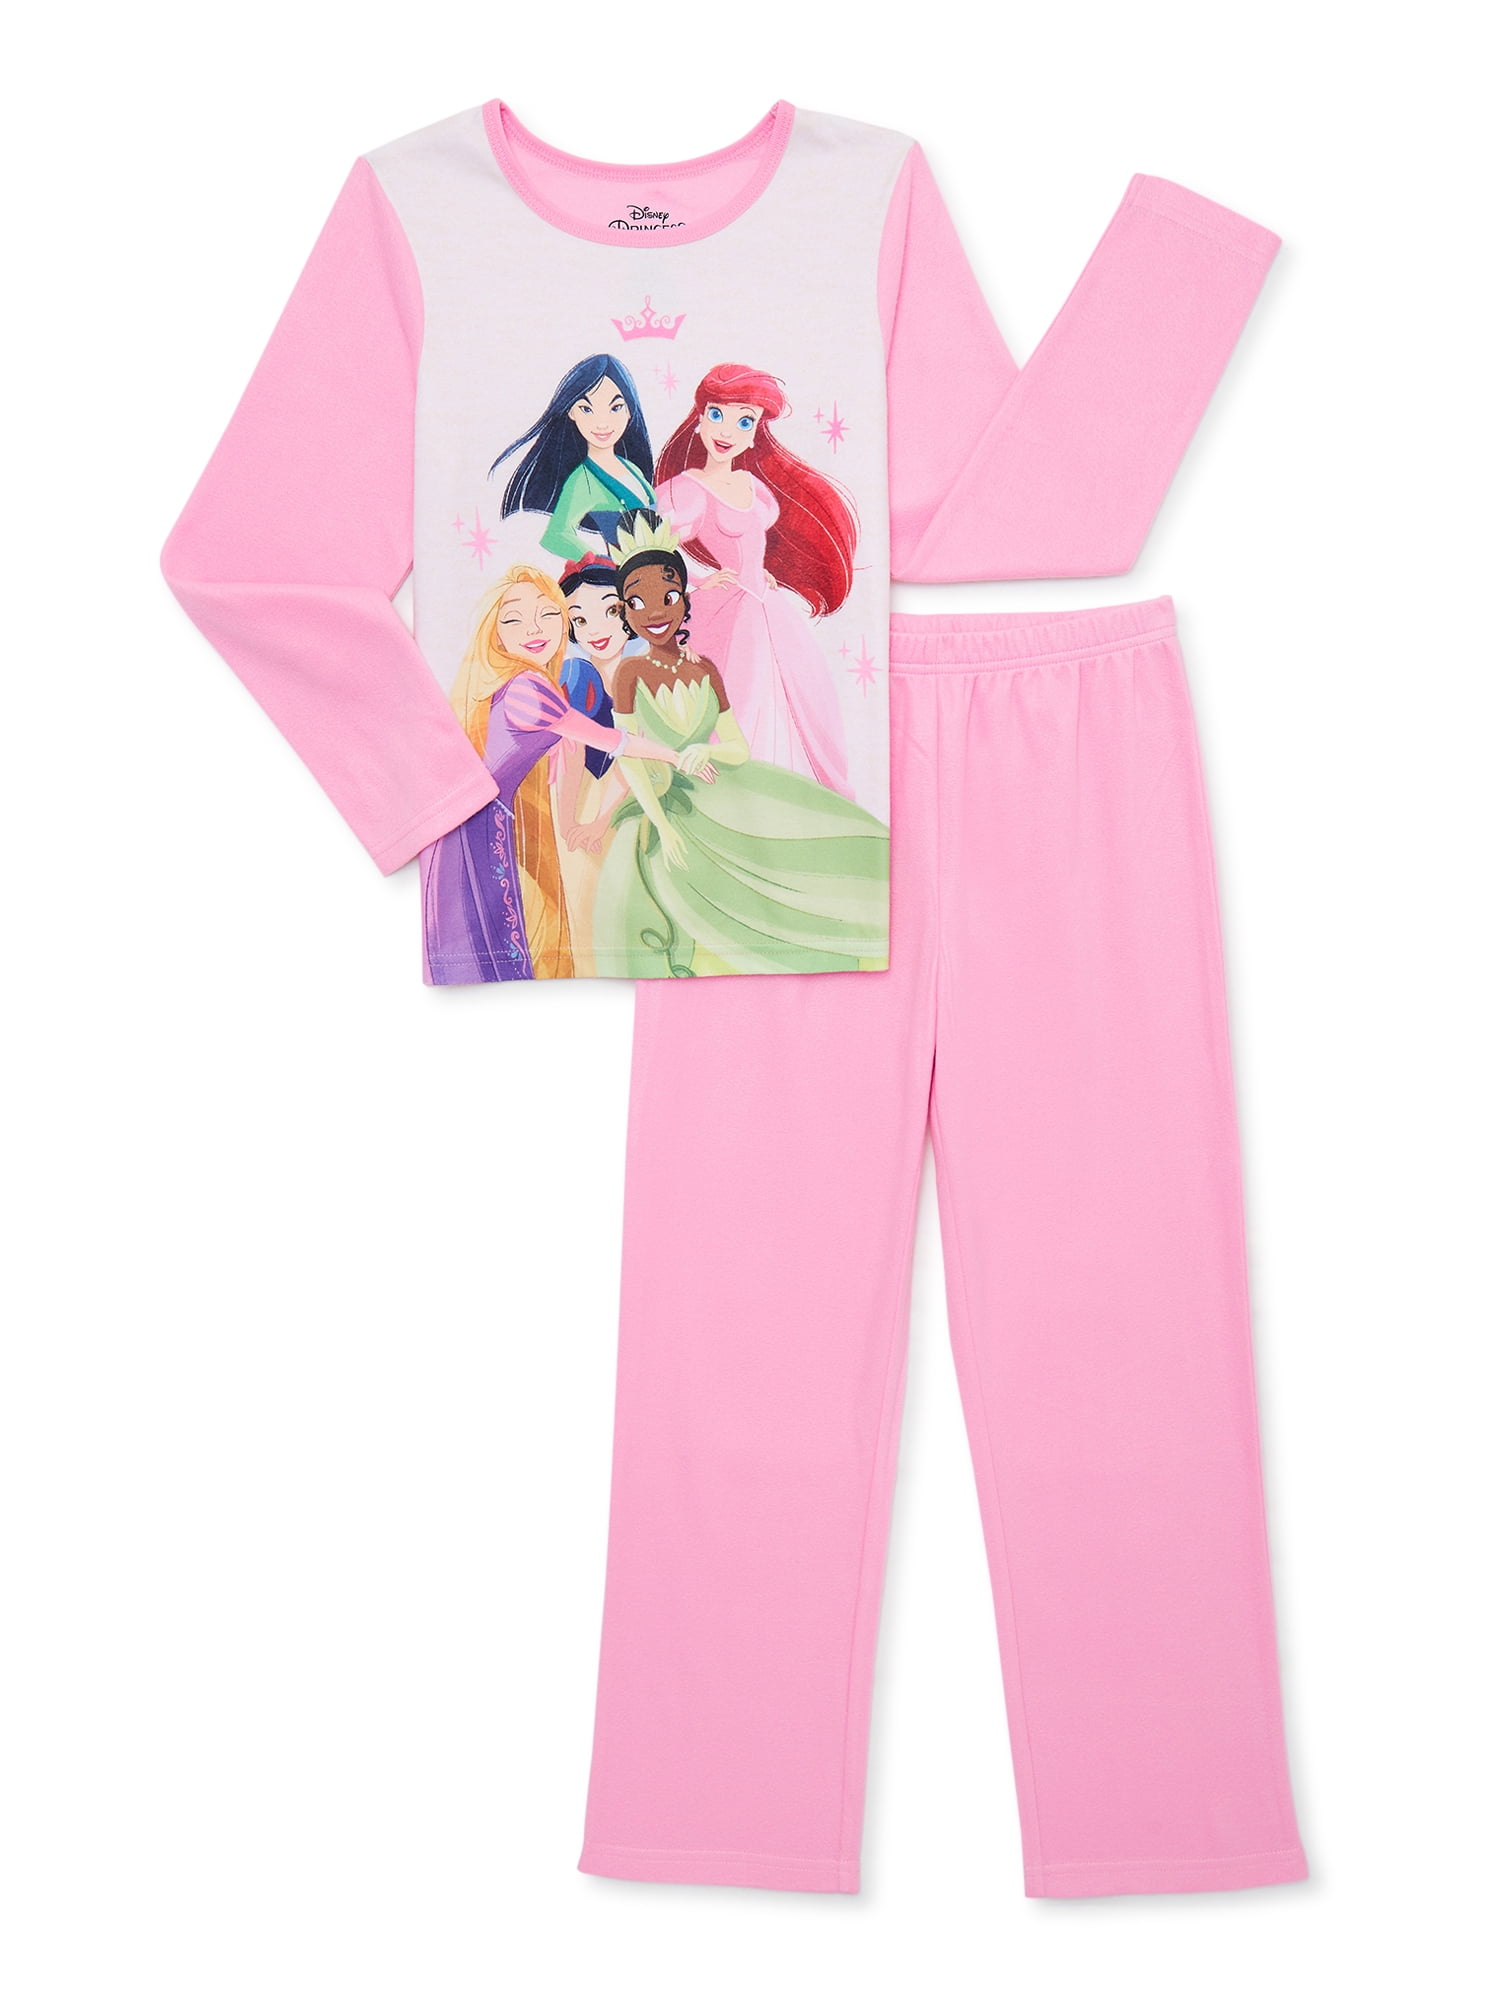 Disney Princess Girls Long Sleeve Top and Pants Pajama Sleep Set, 2-Piece, Sizes 4-12